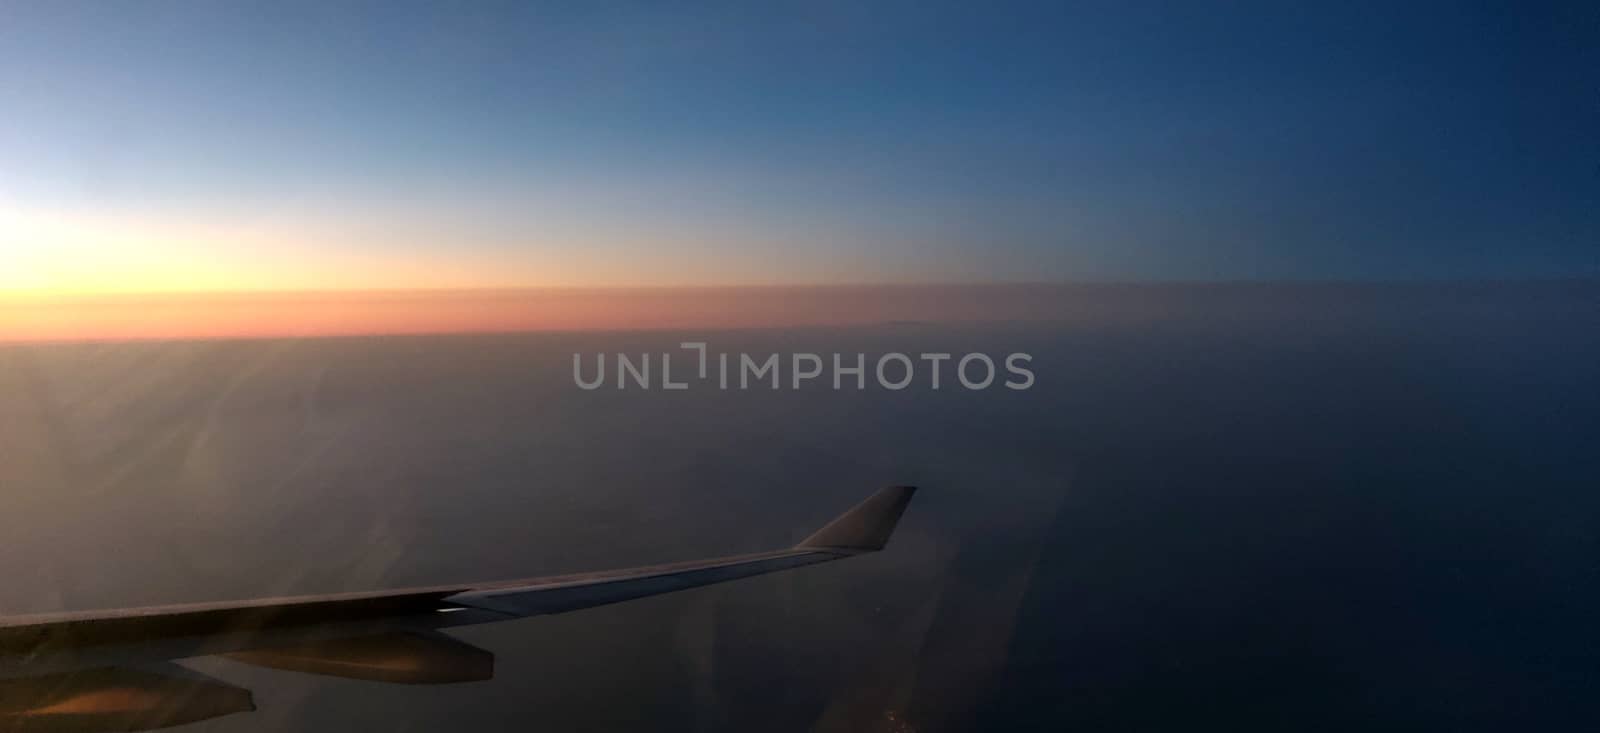 Airplane wing amidst setting sun in horizon by mshivangi92